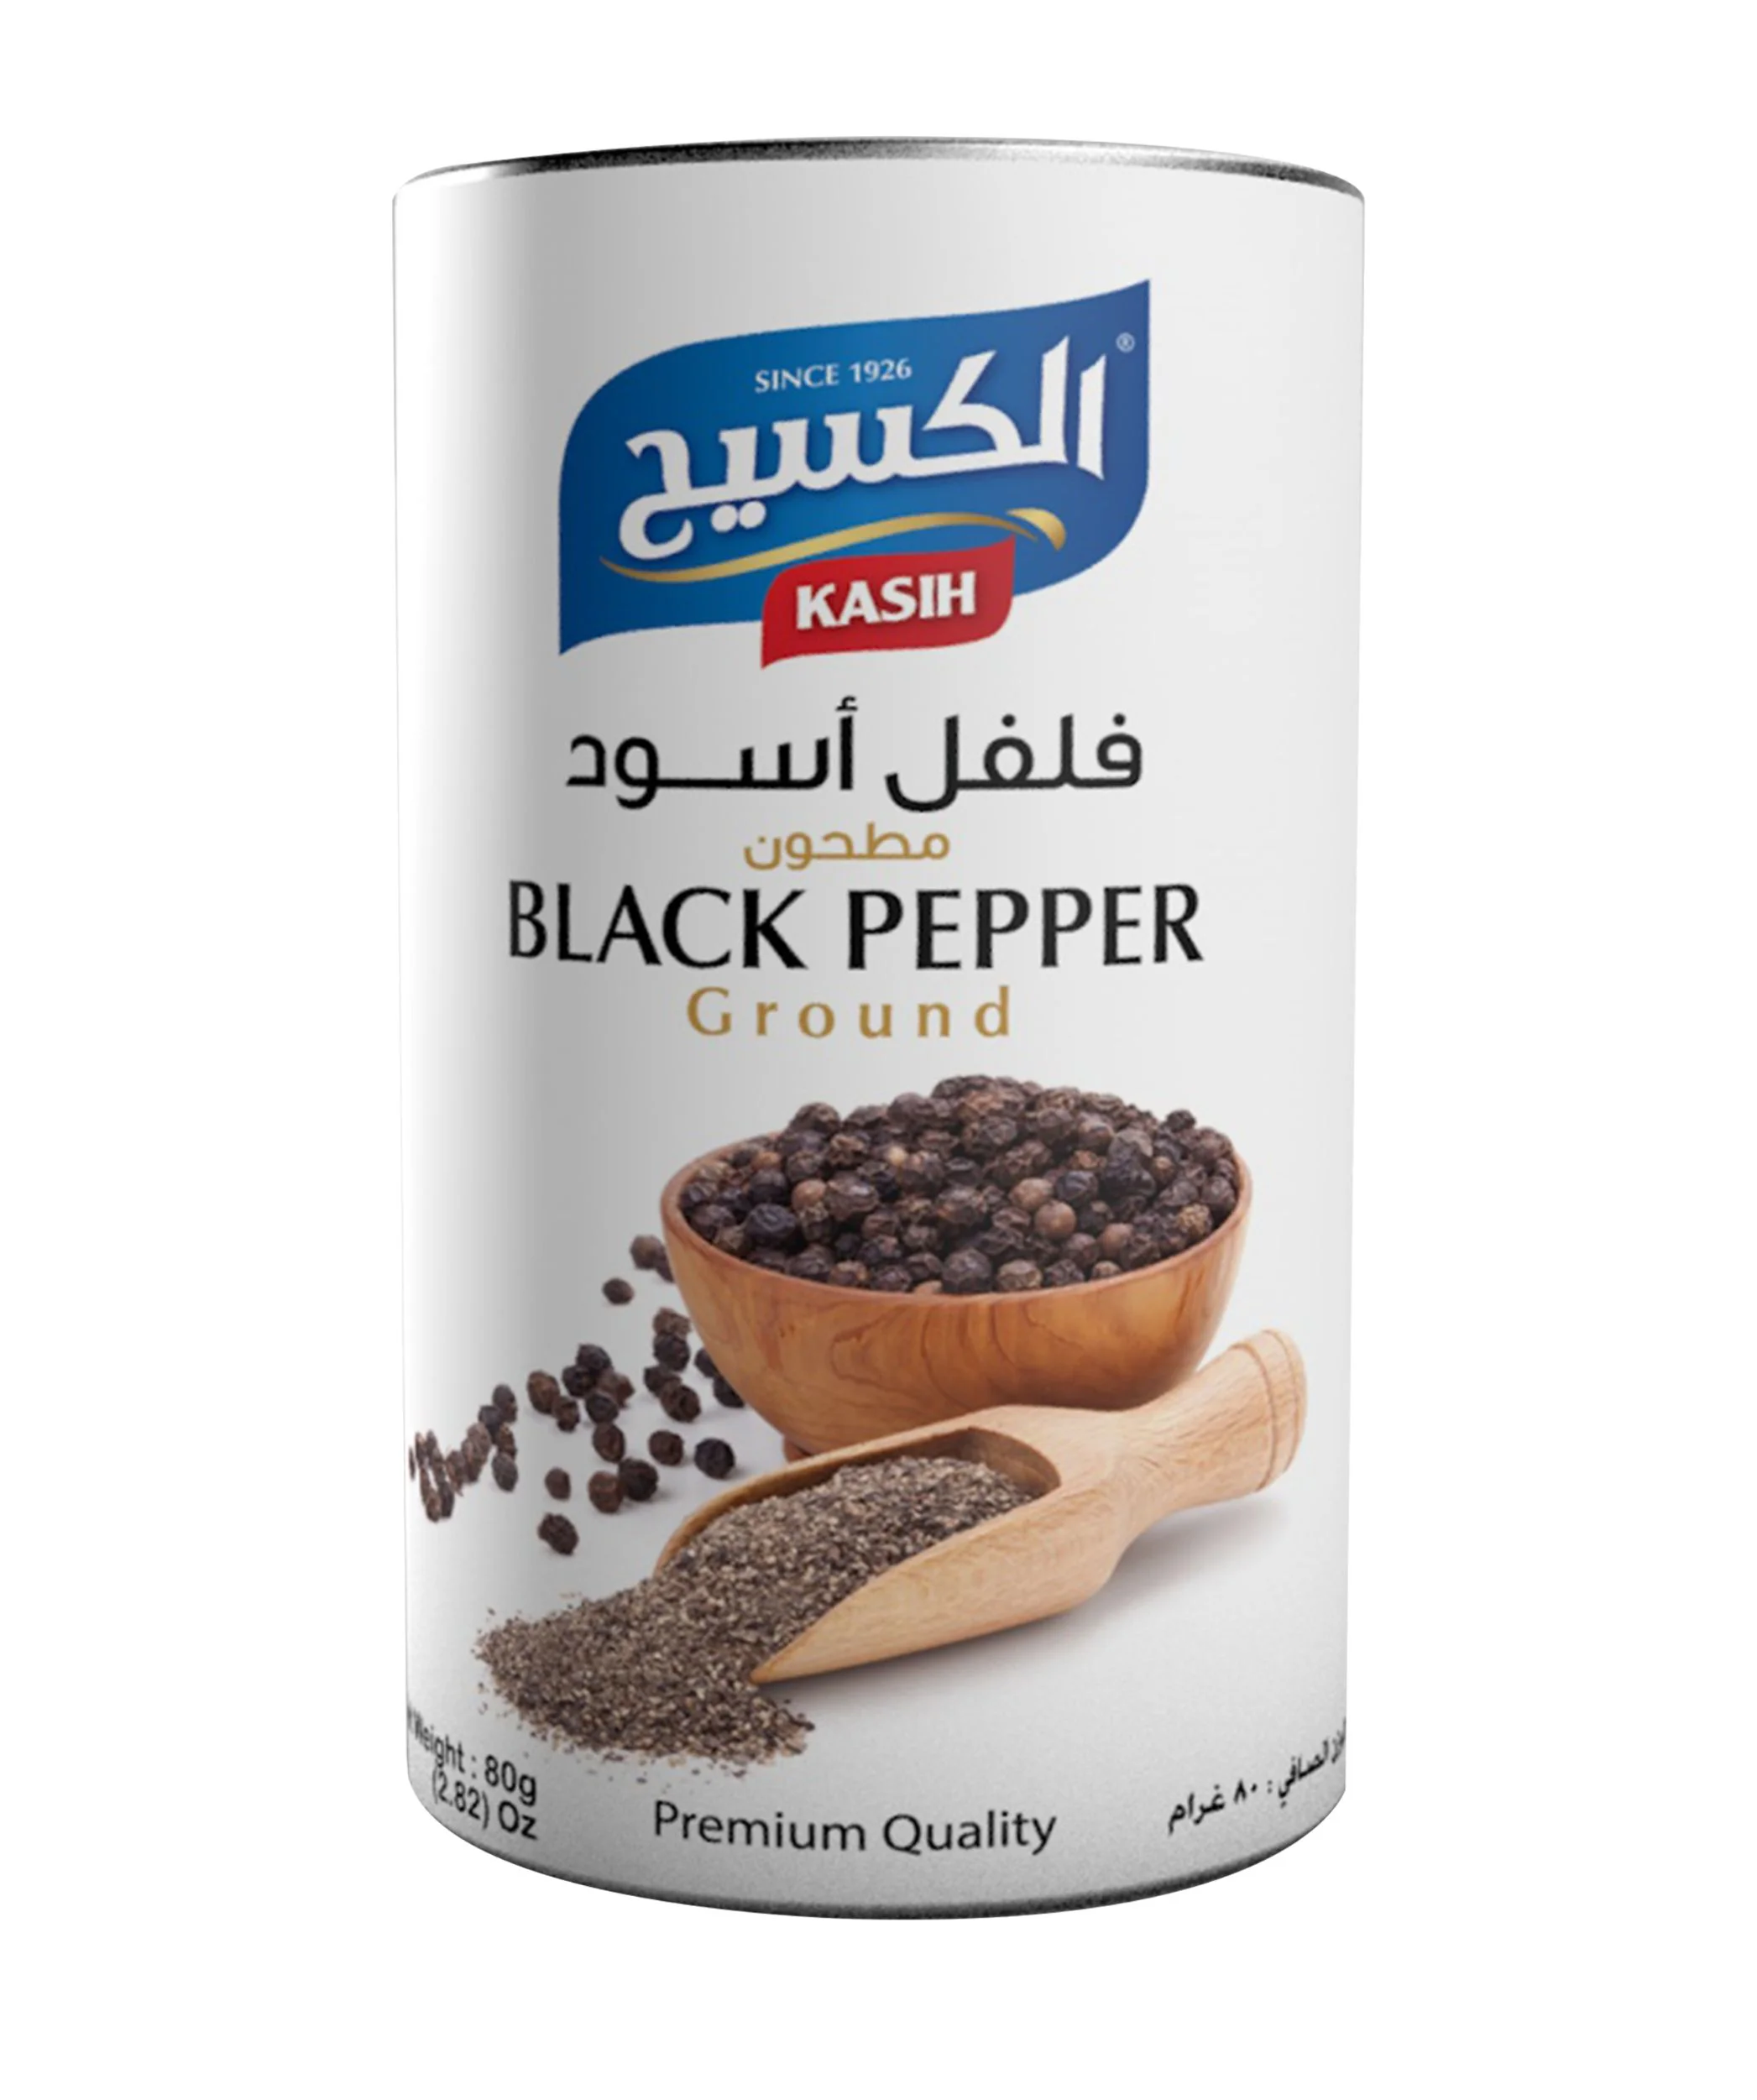 KASIH Black pepper ground